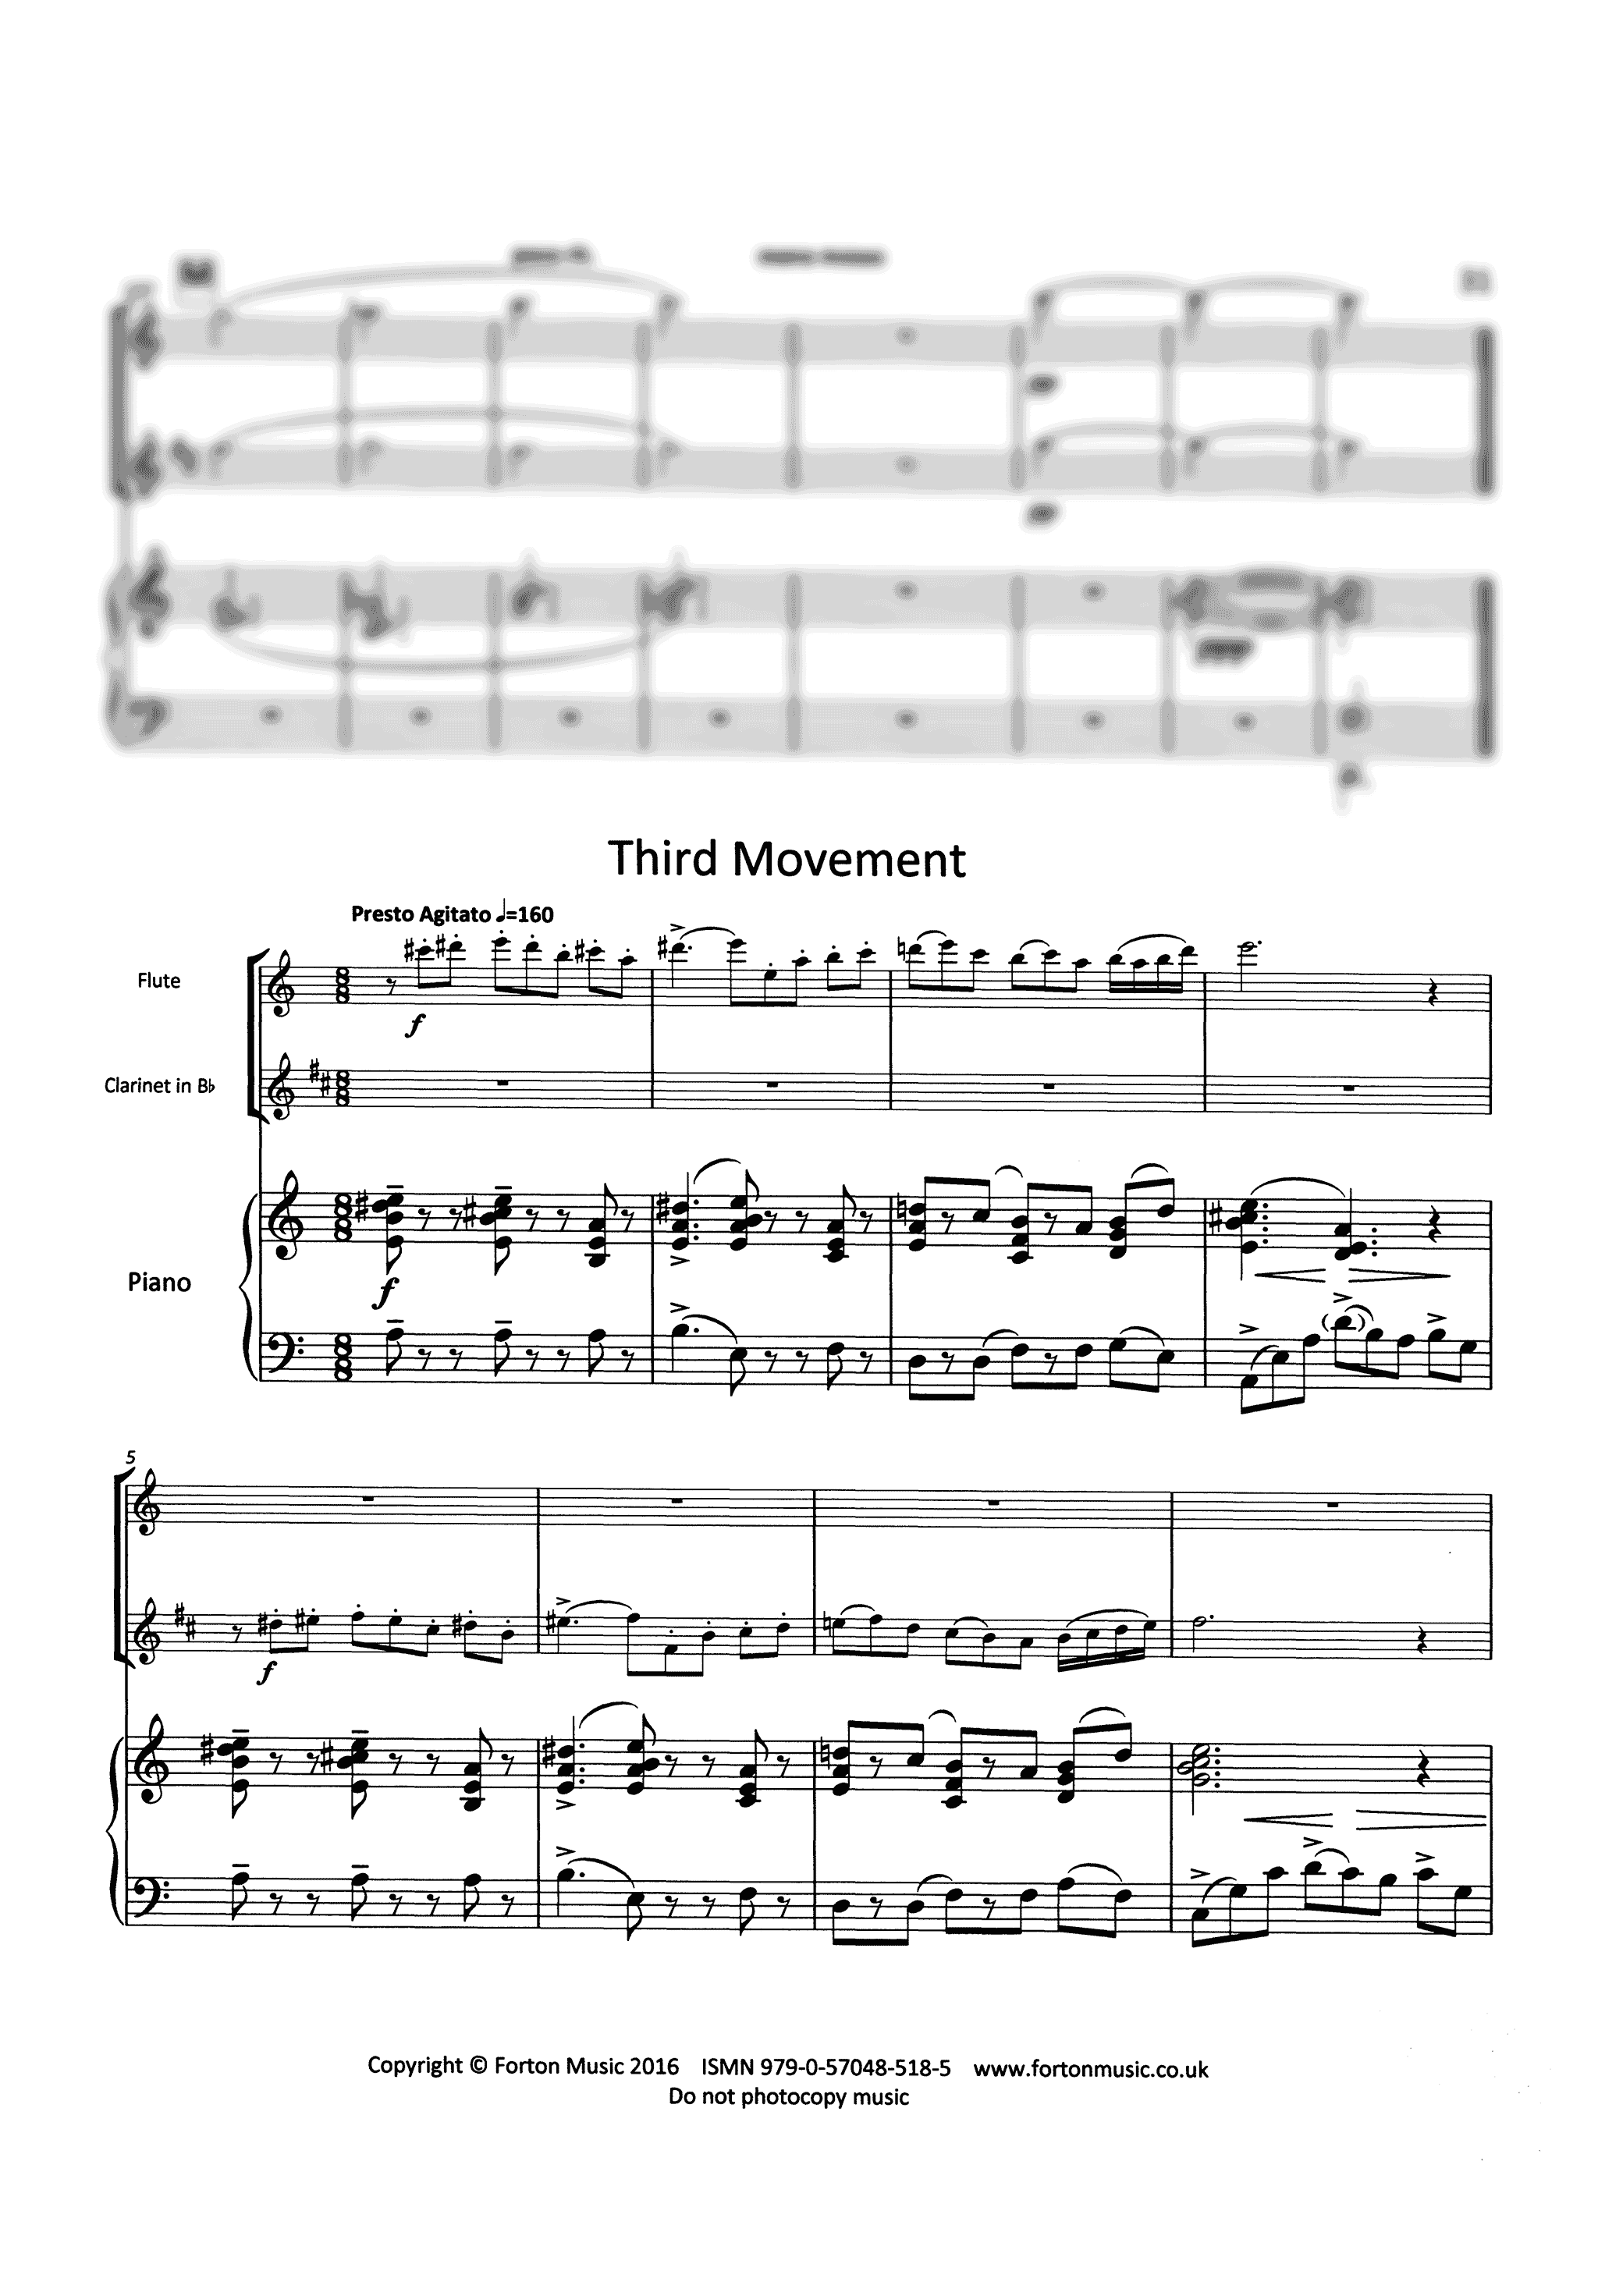 Bridgewater Double Concerto for Flute & Clarinet piano reduction - Movement 3